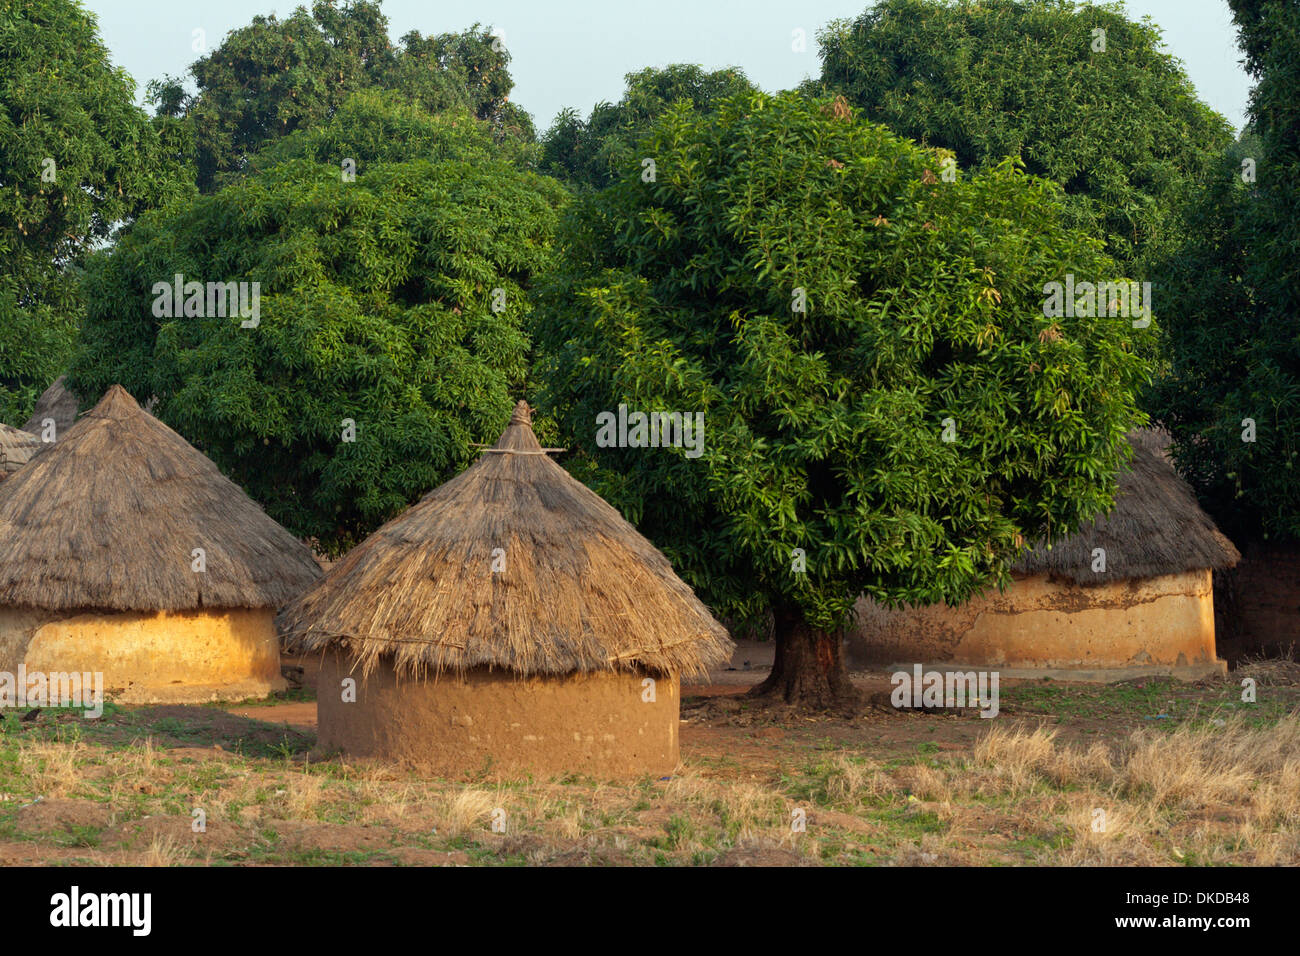 village Guinea Africa mud hut grass roof mango trees Stock Photo